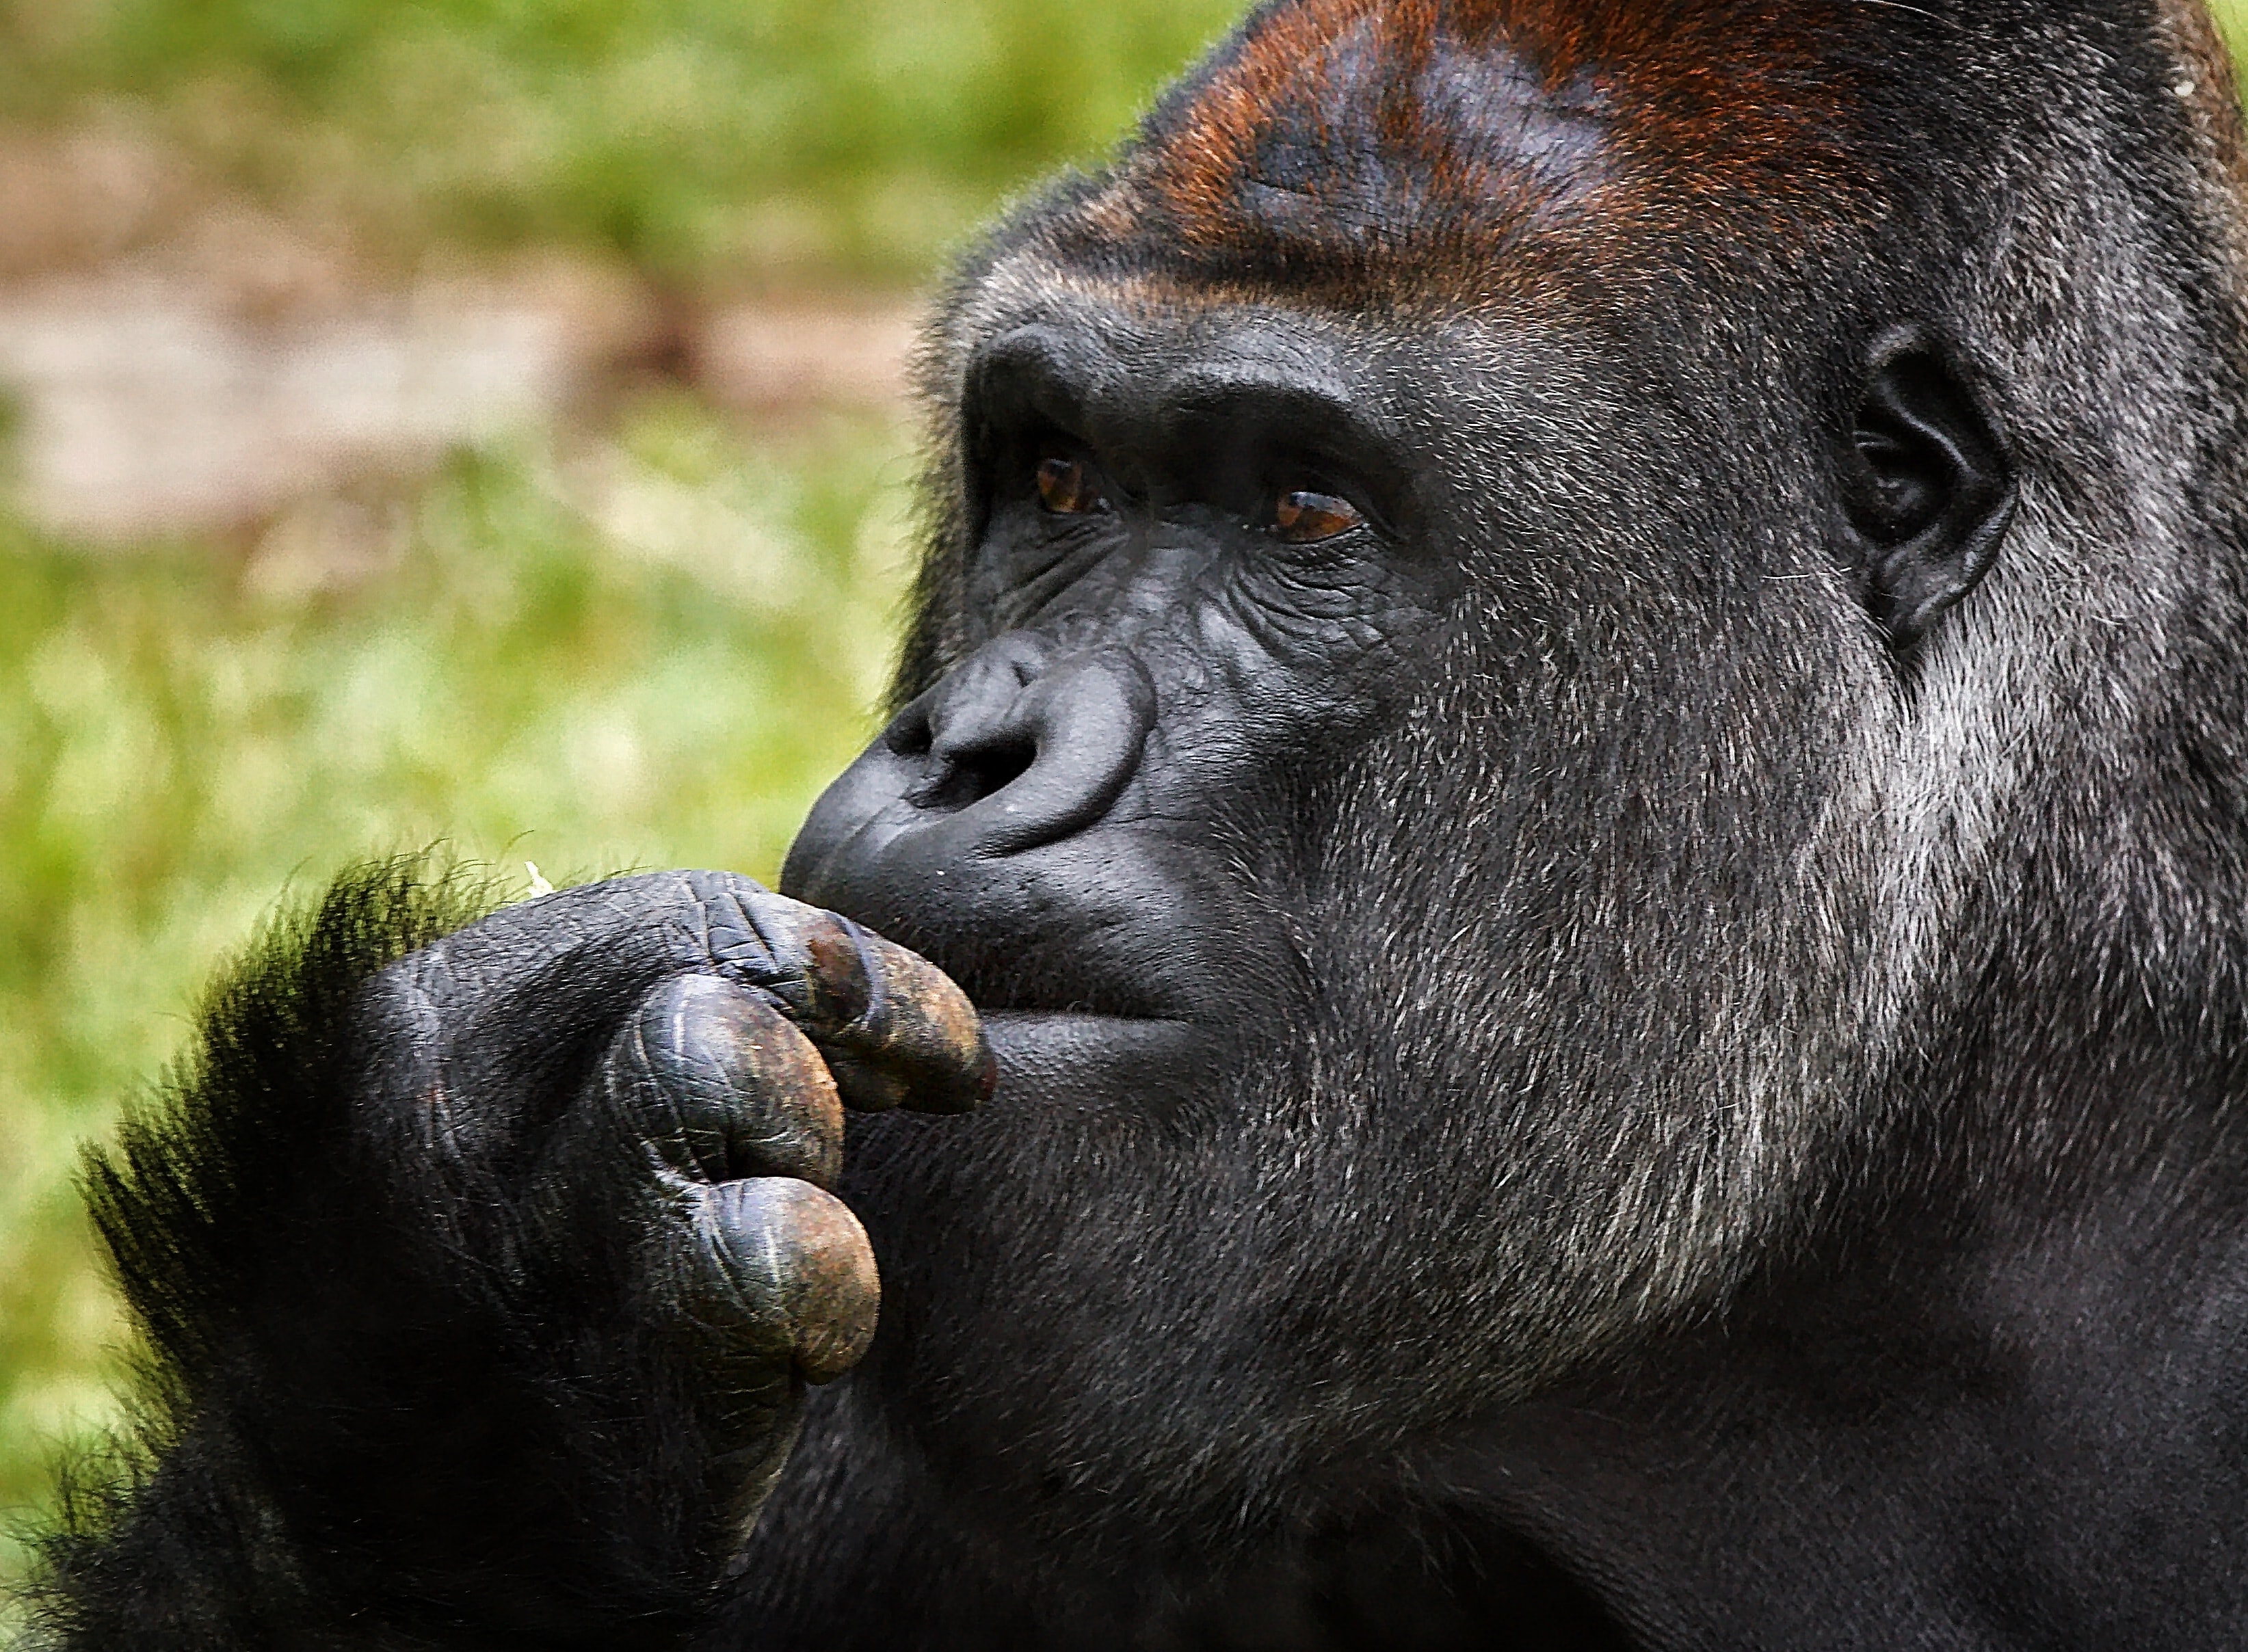 A gorilla looks thoughtful